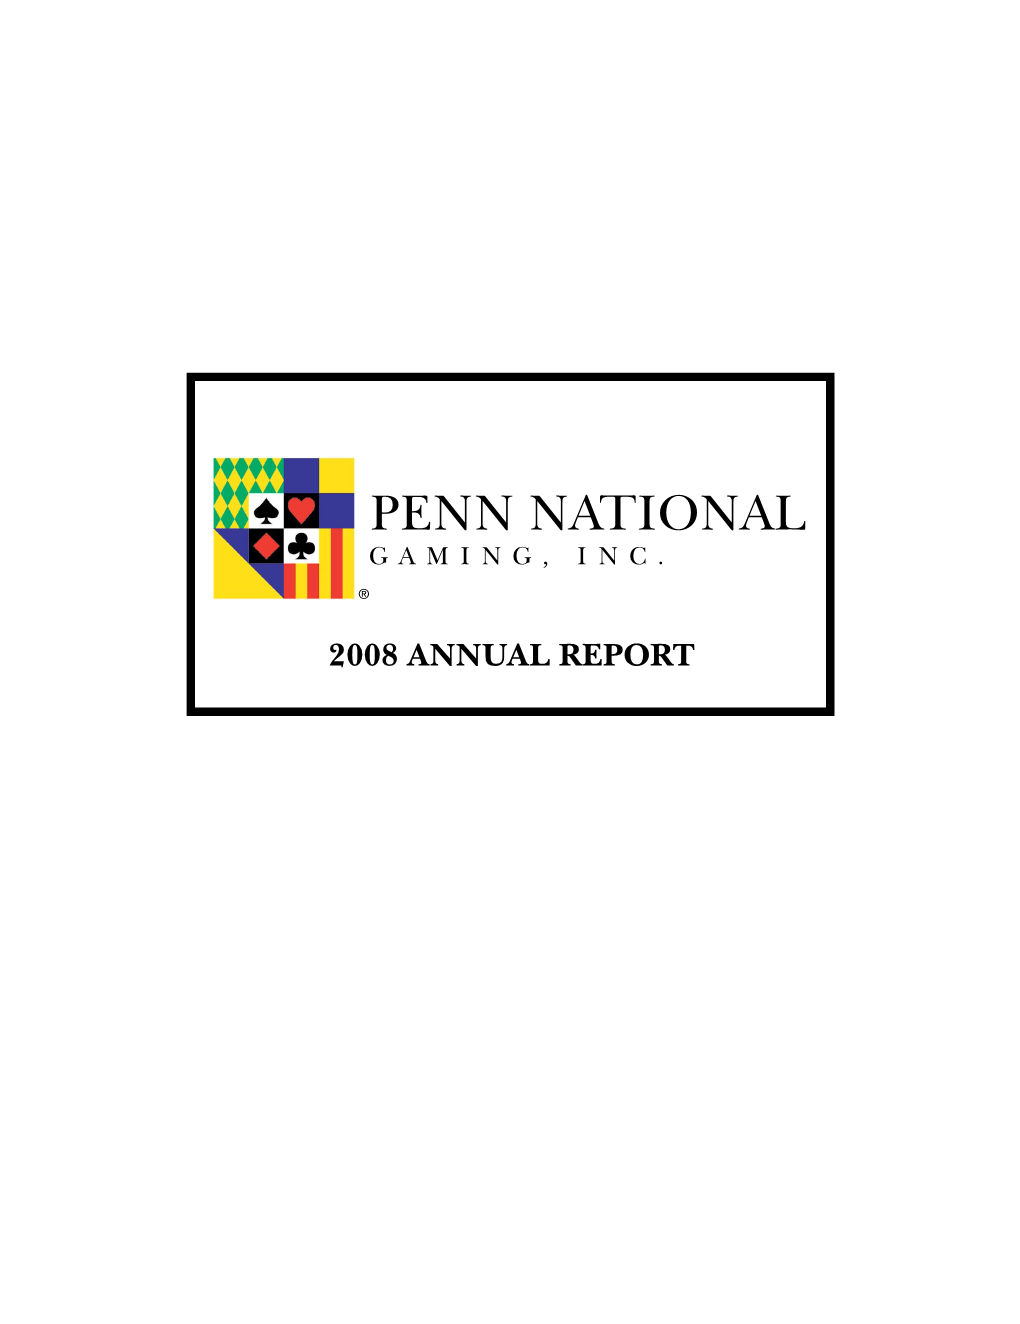 Penn National Gaming, Inc